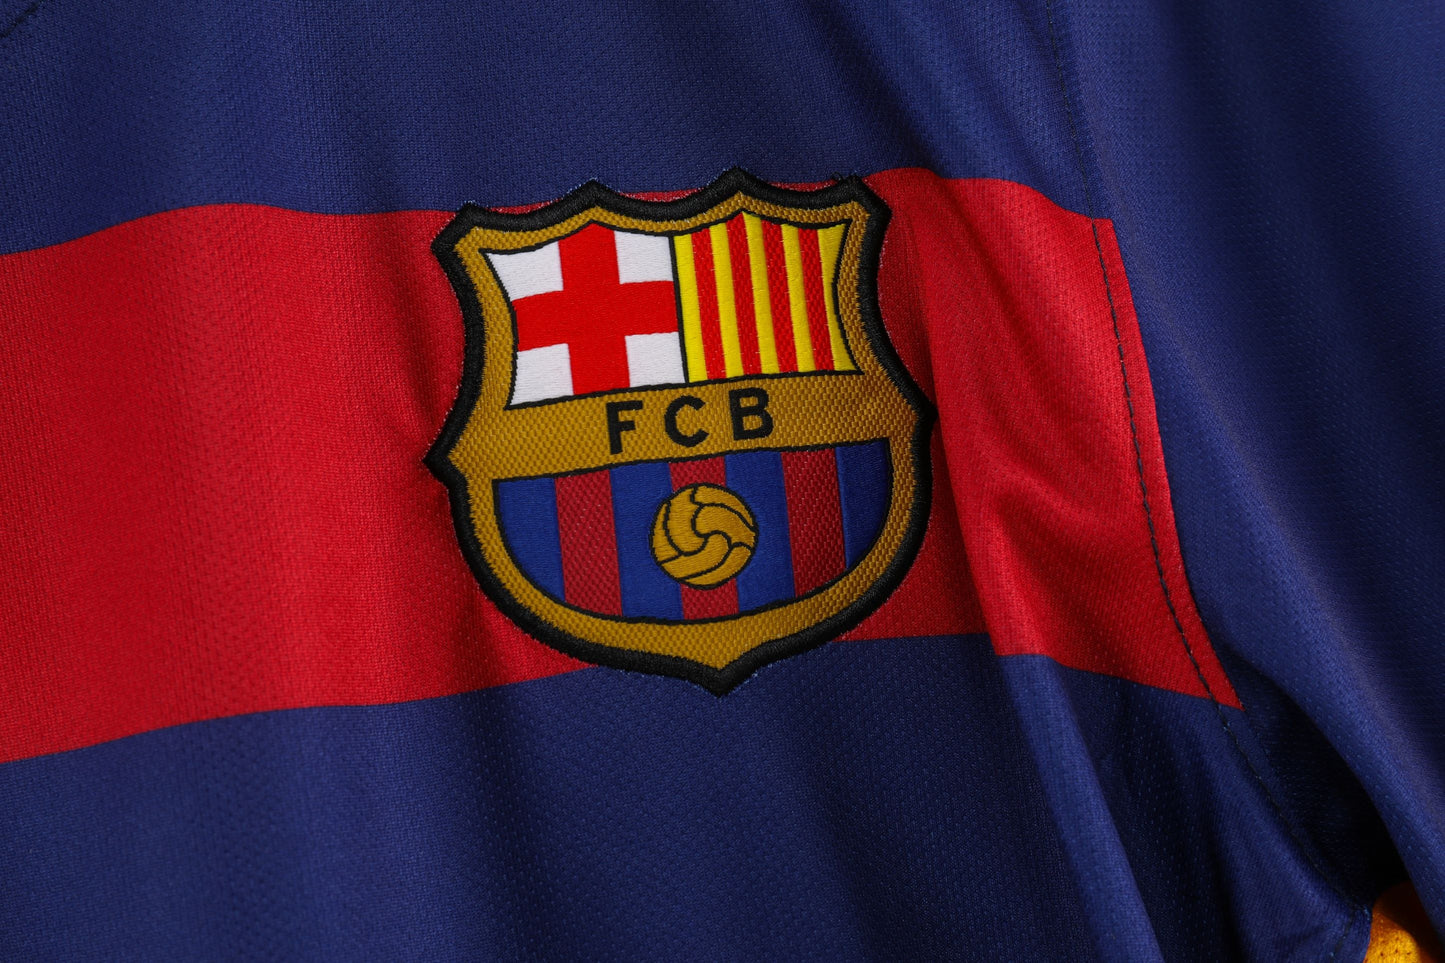 2015/16 Barcelona home games